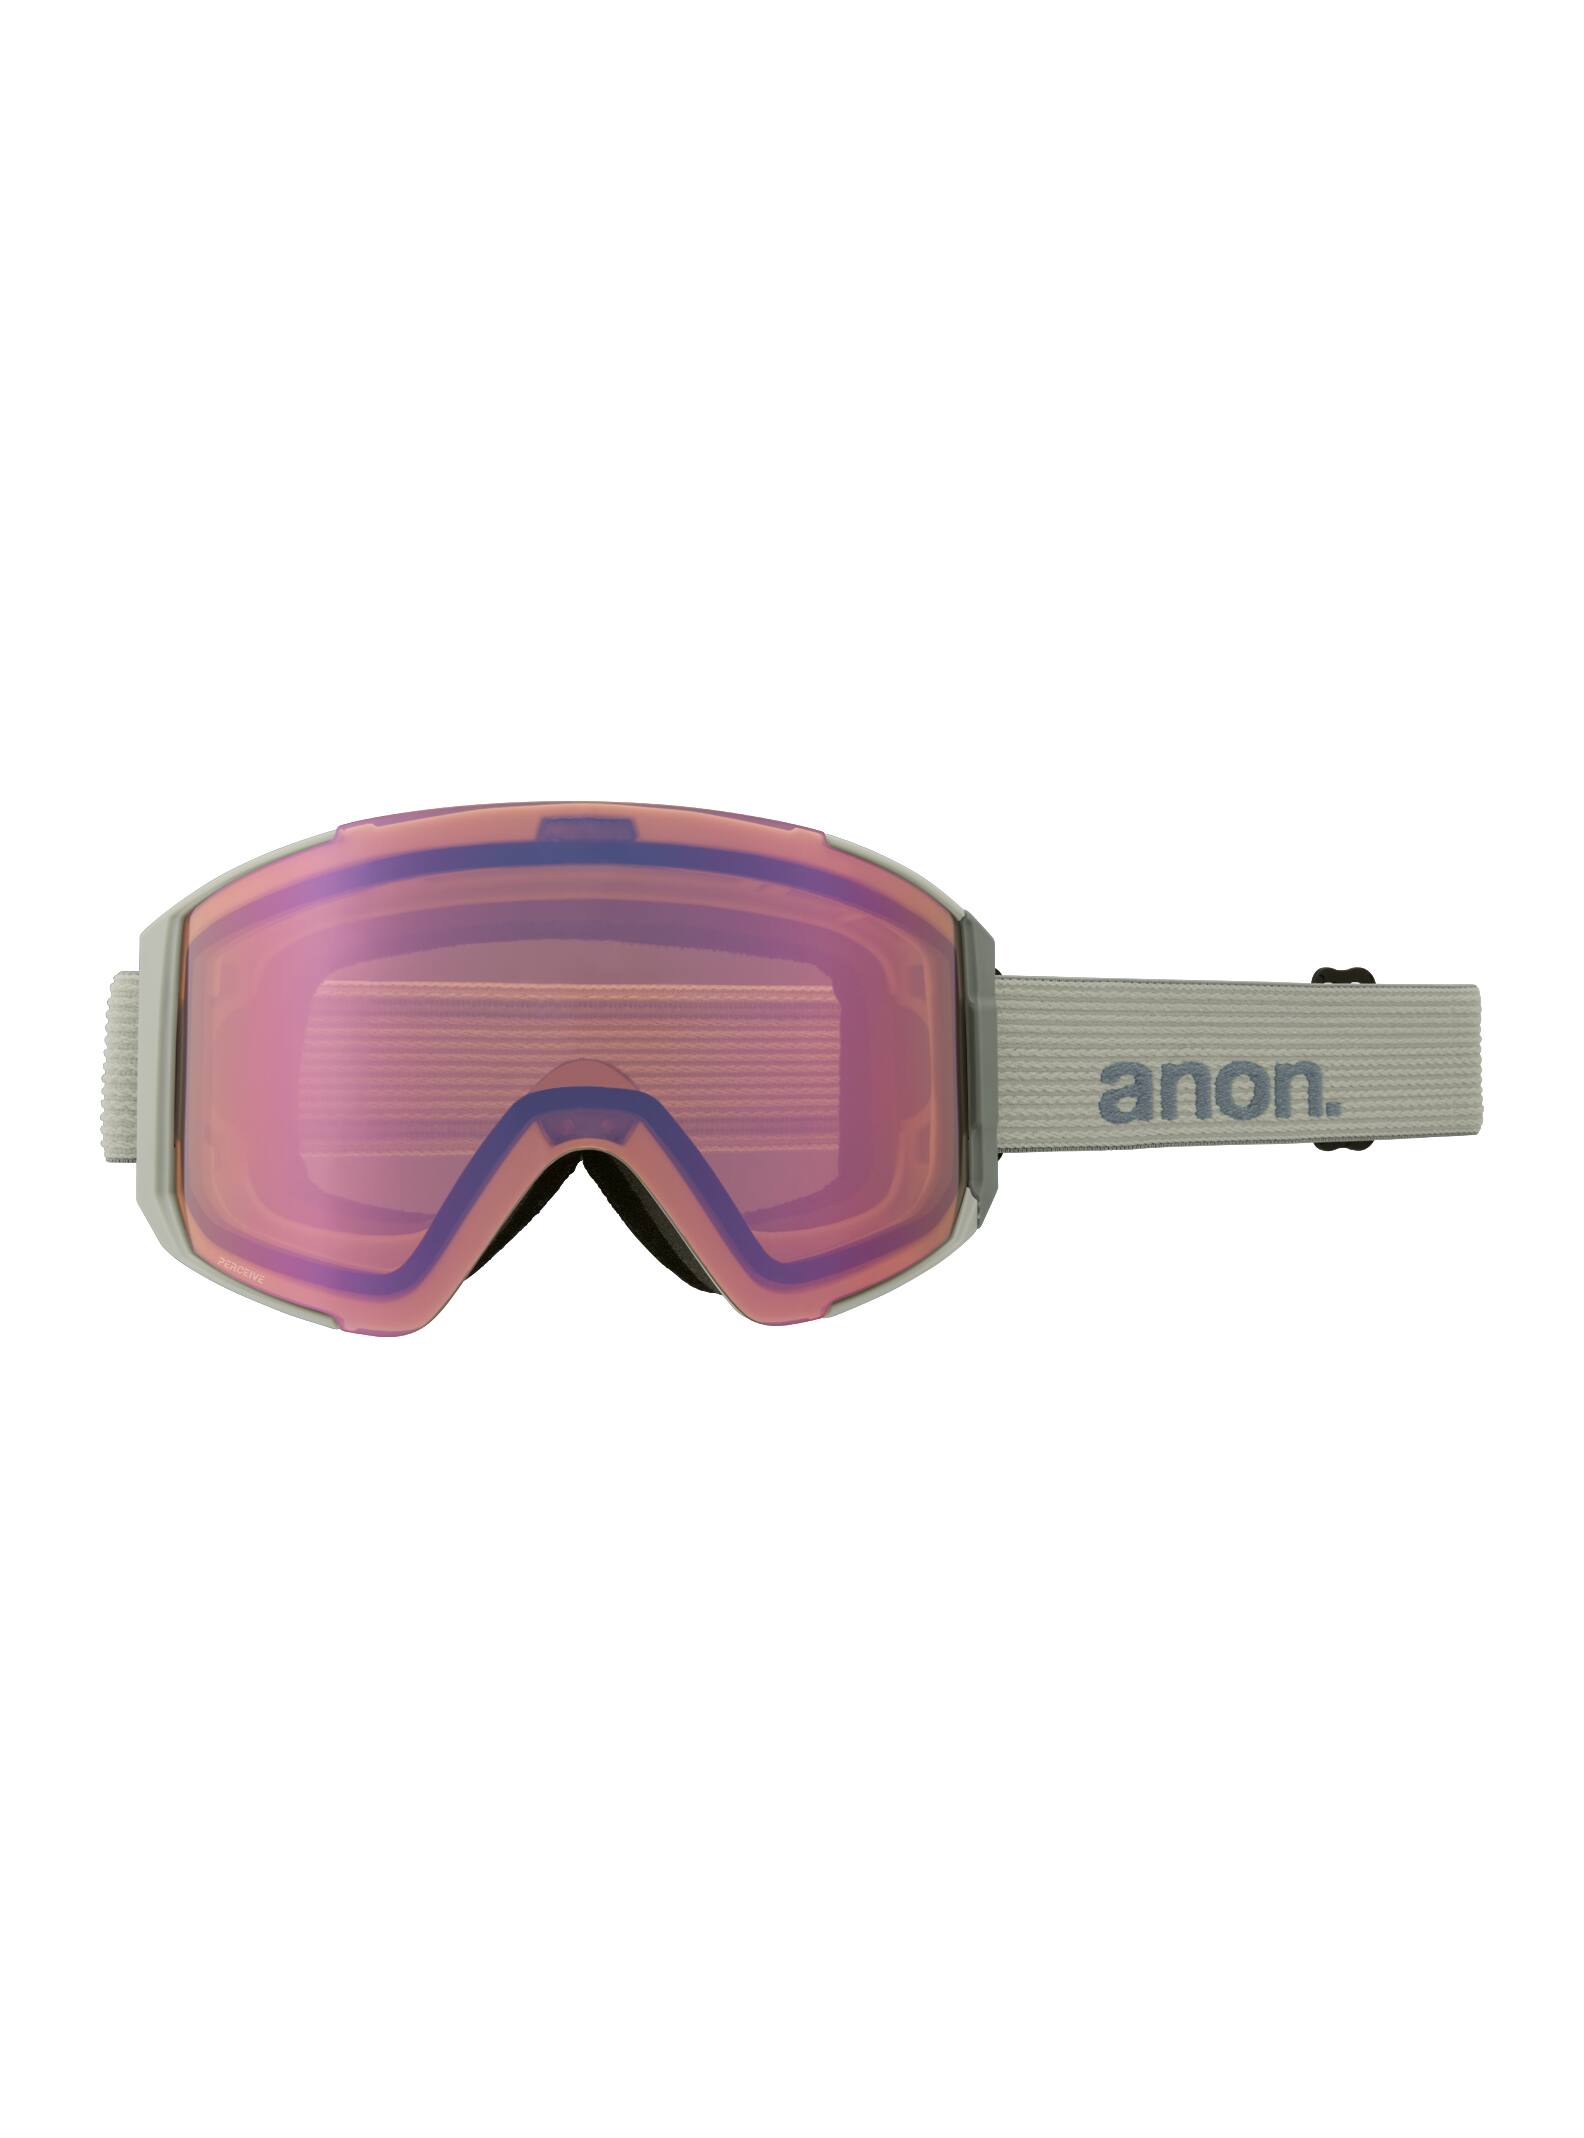 Men's Anon Sync Goggle + Bonus Lens - Asian Fit | Burton.com 